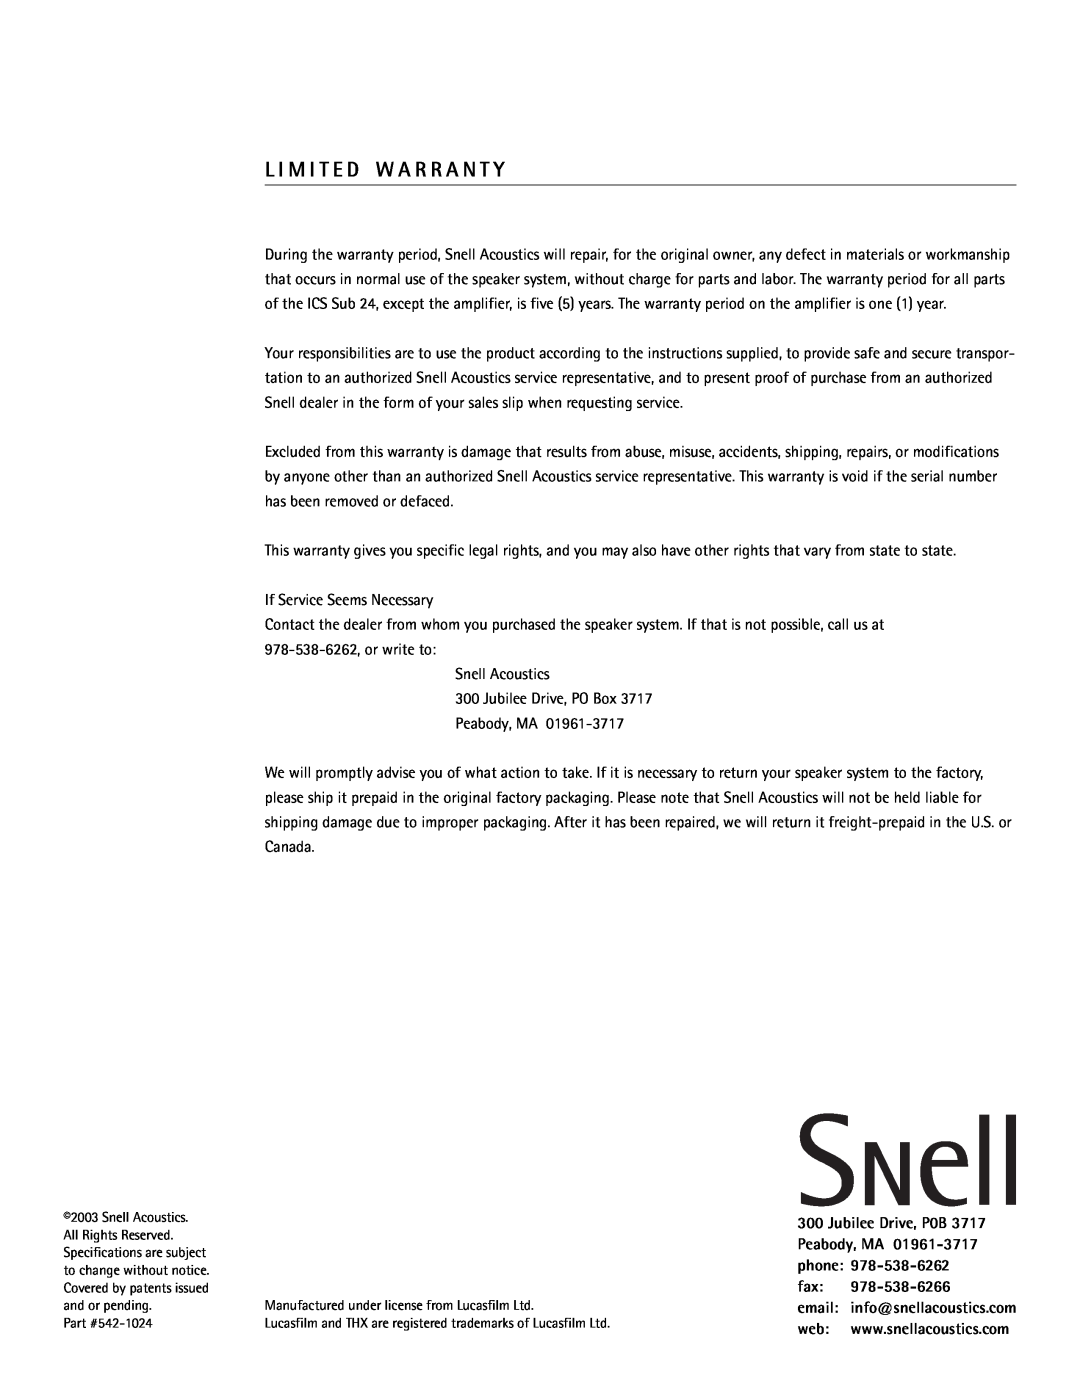 Snell Acoustics ICS Sub 24 owner manual L I M I T E D W A R R A N T Y, Jubilee Drive, P0B, Peabody, MA 